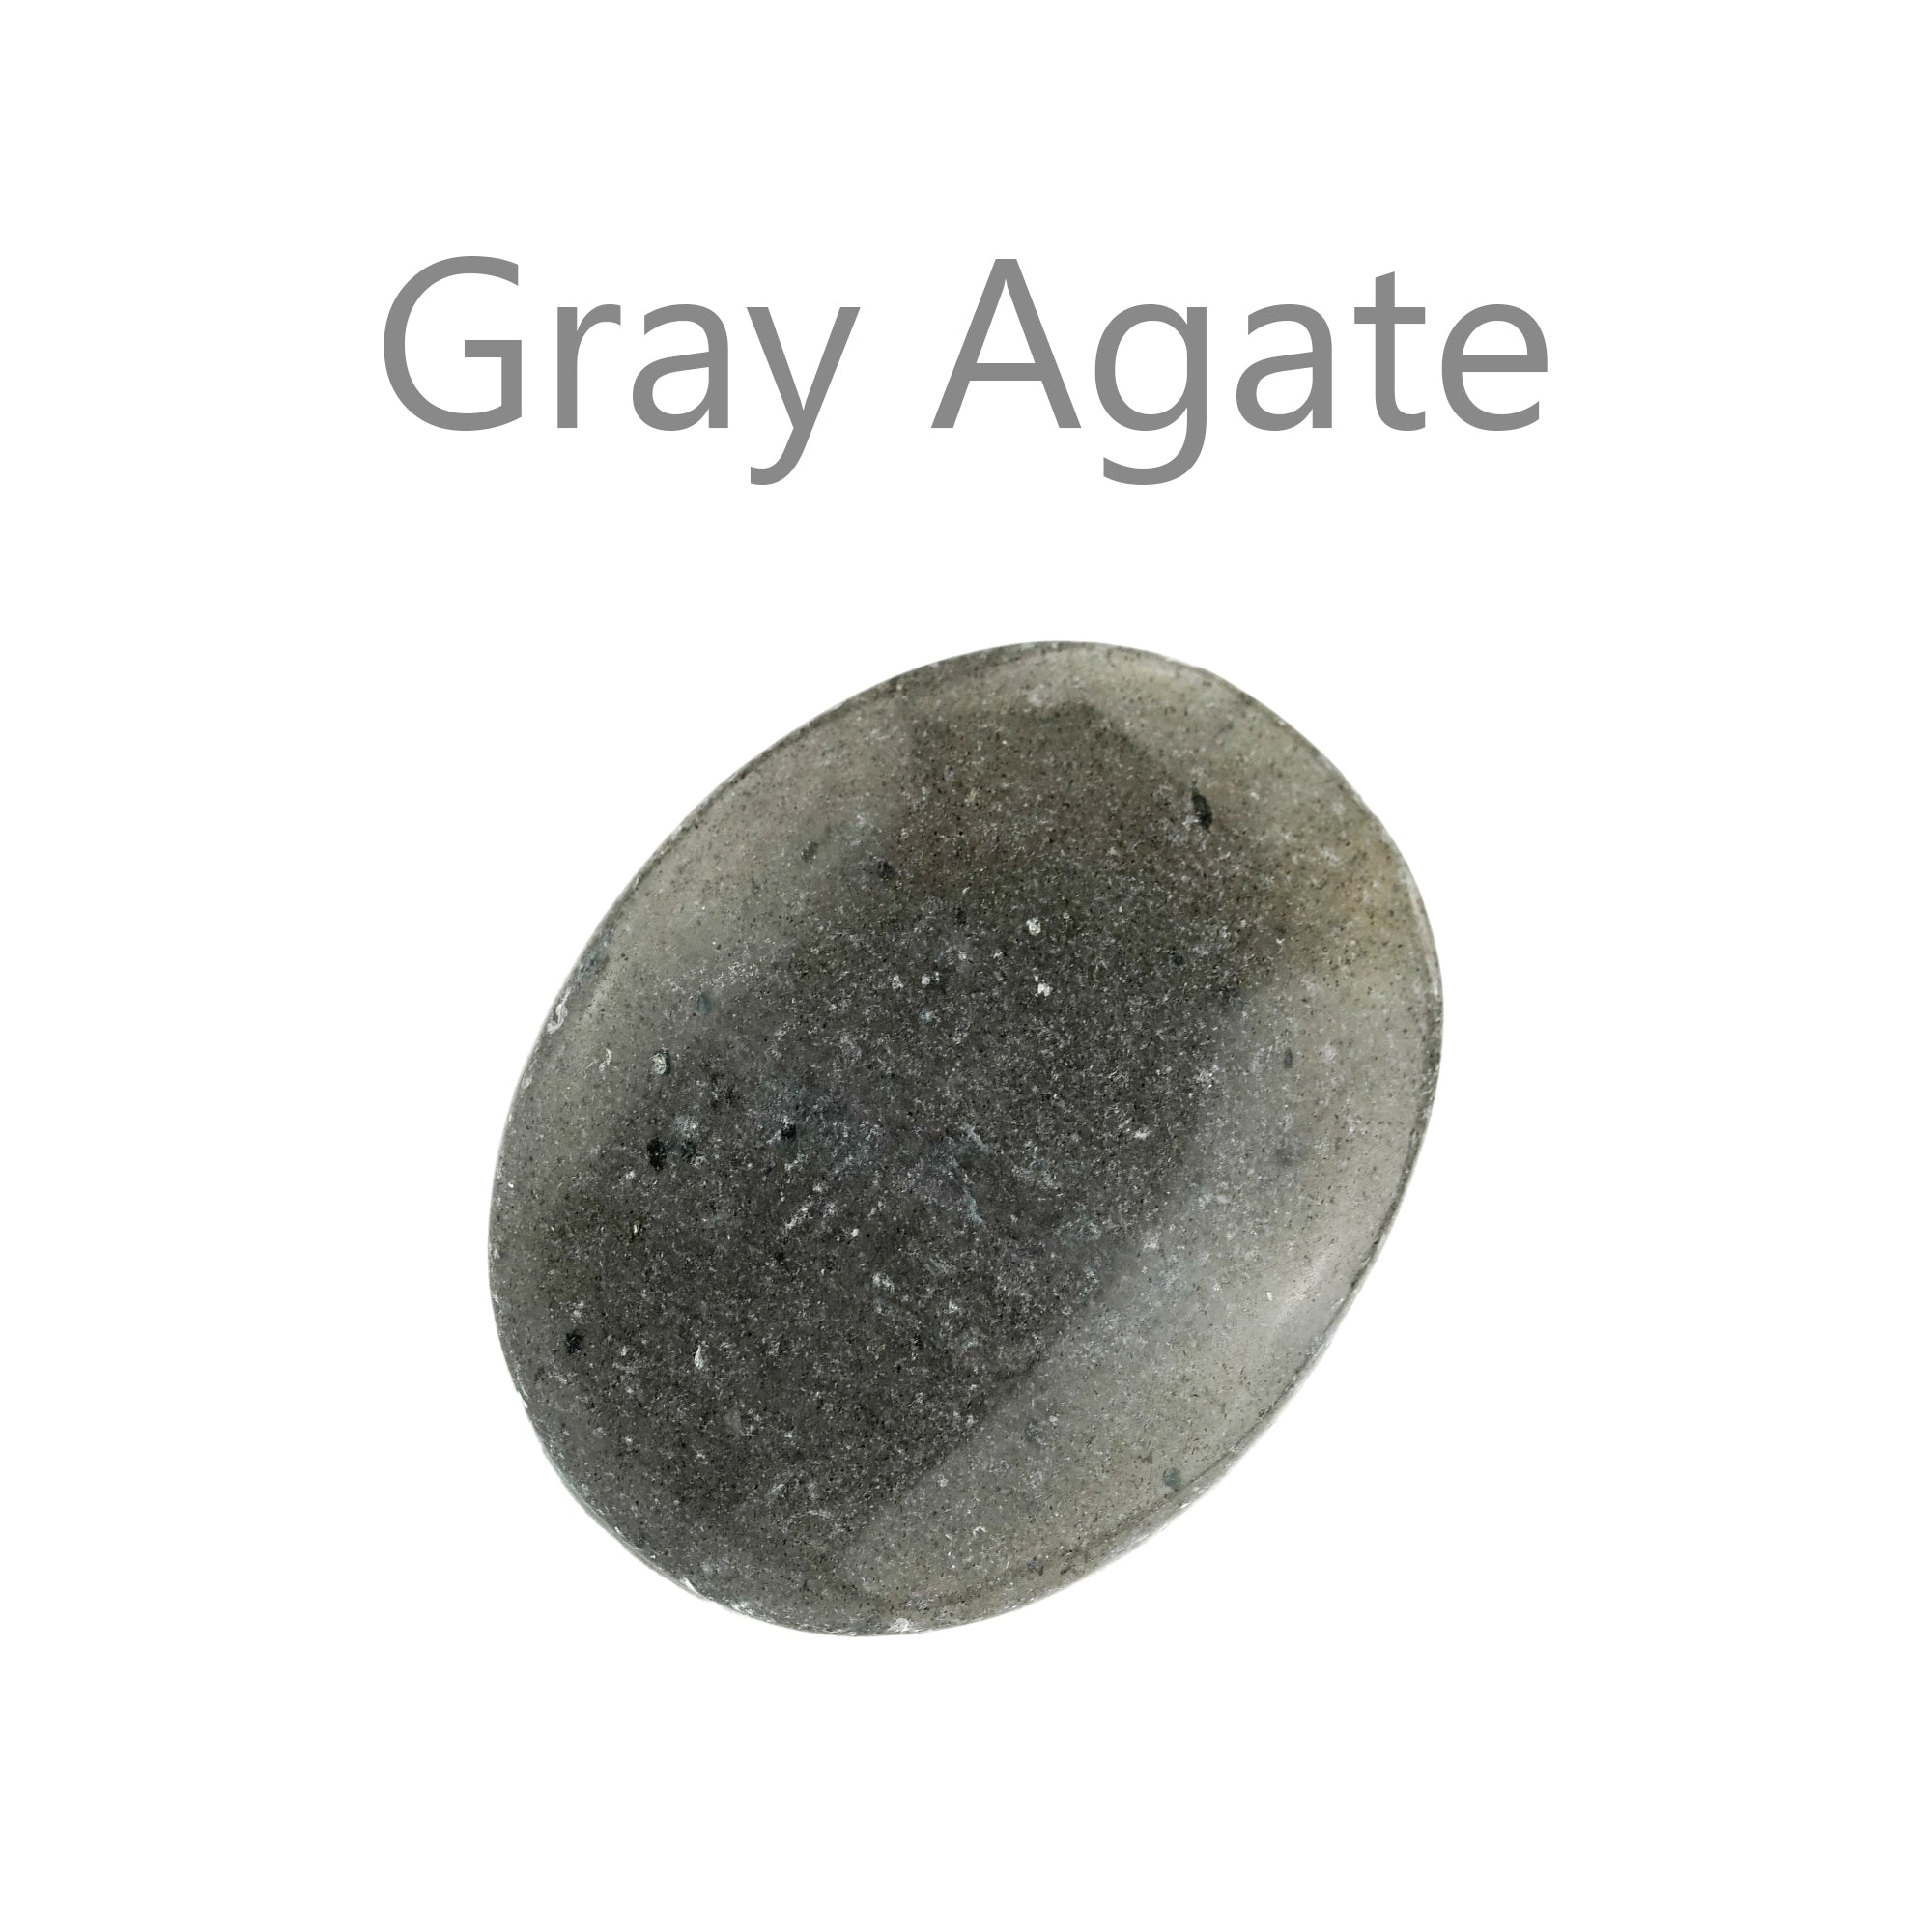 gray agate